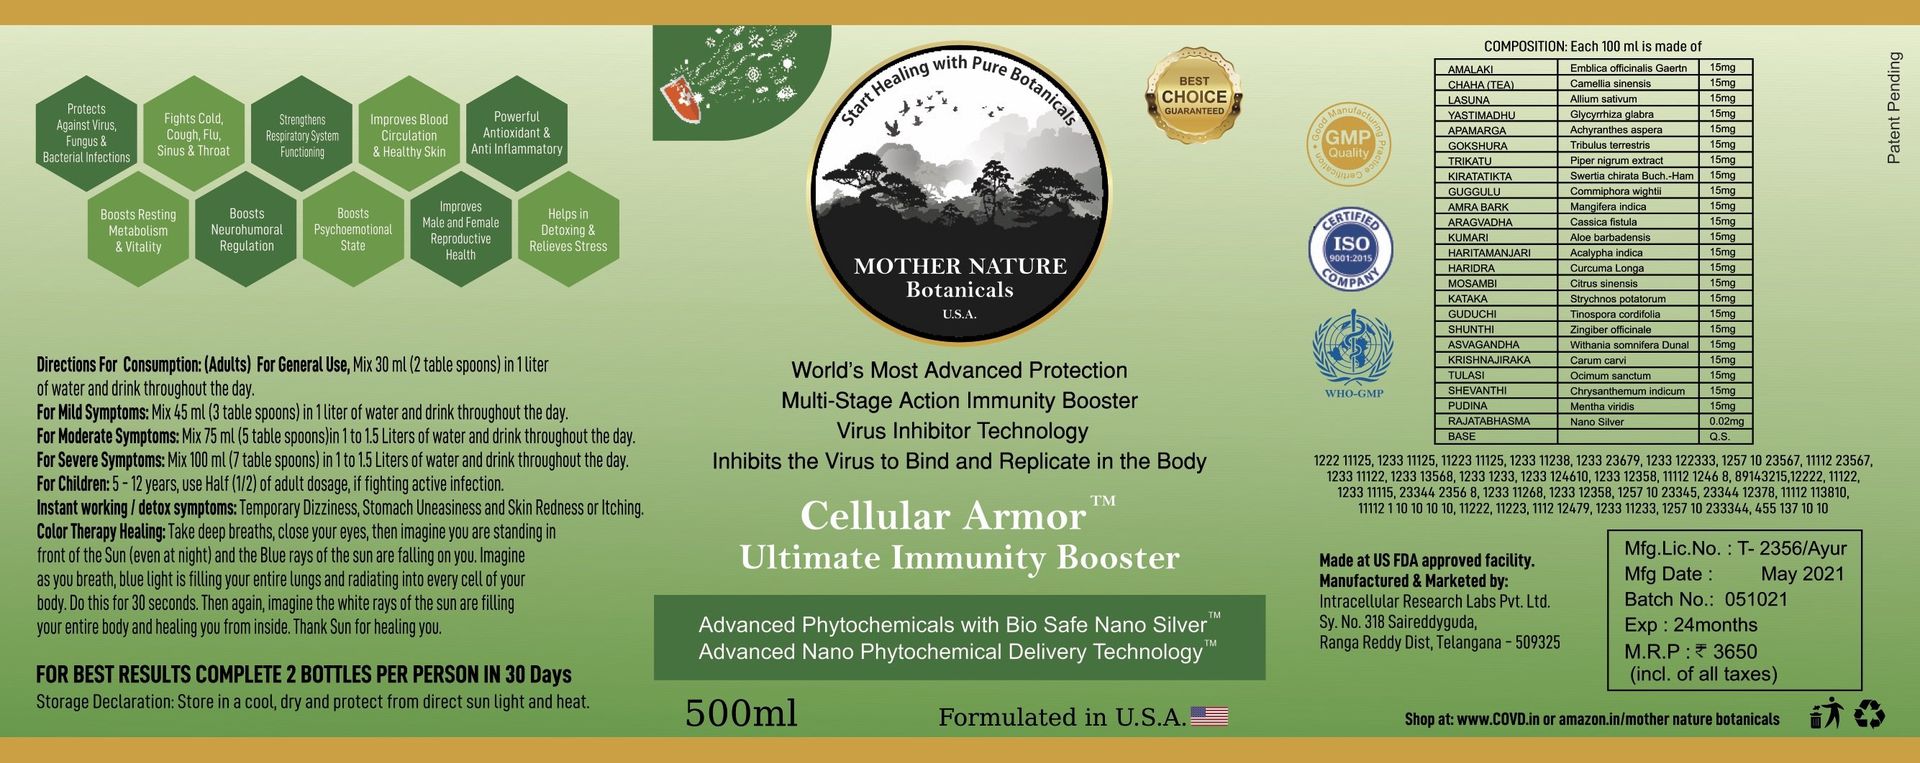 Mother Nature Botanical's Ultimate Immunity Booster - hfnl!fe